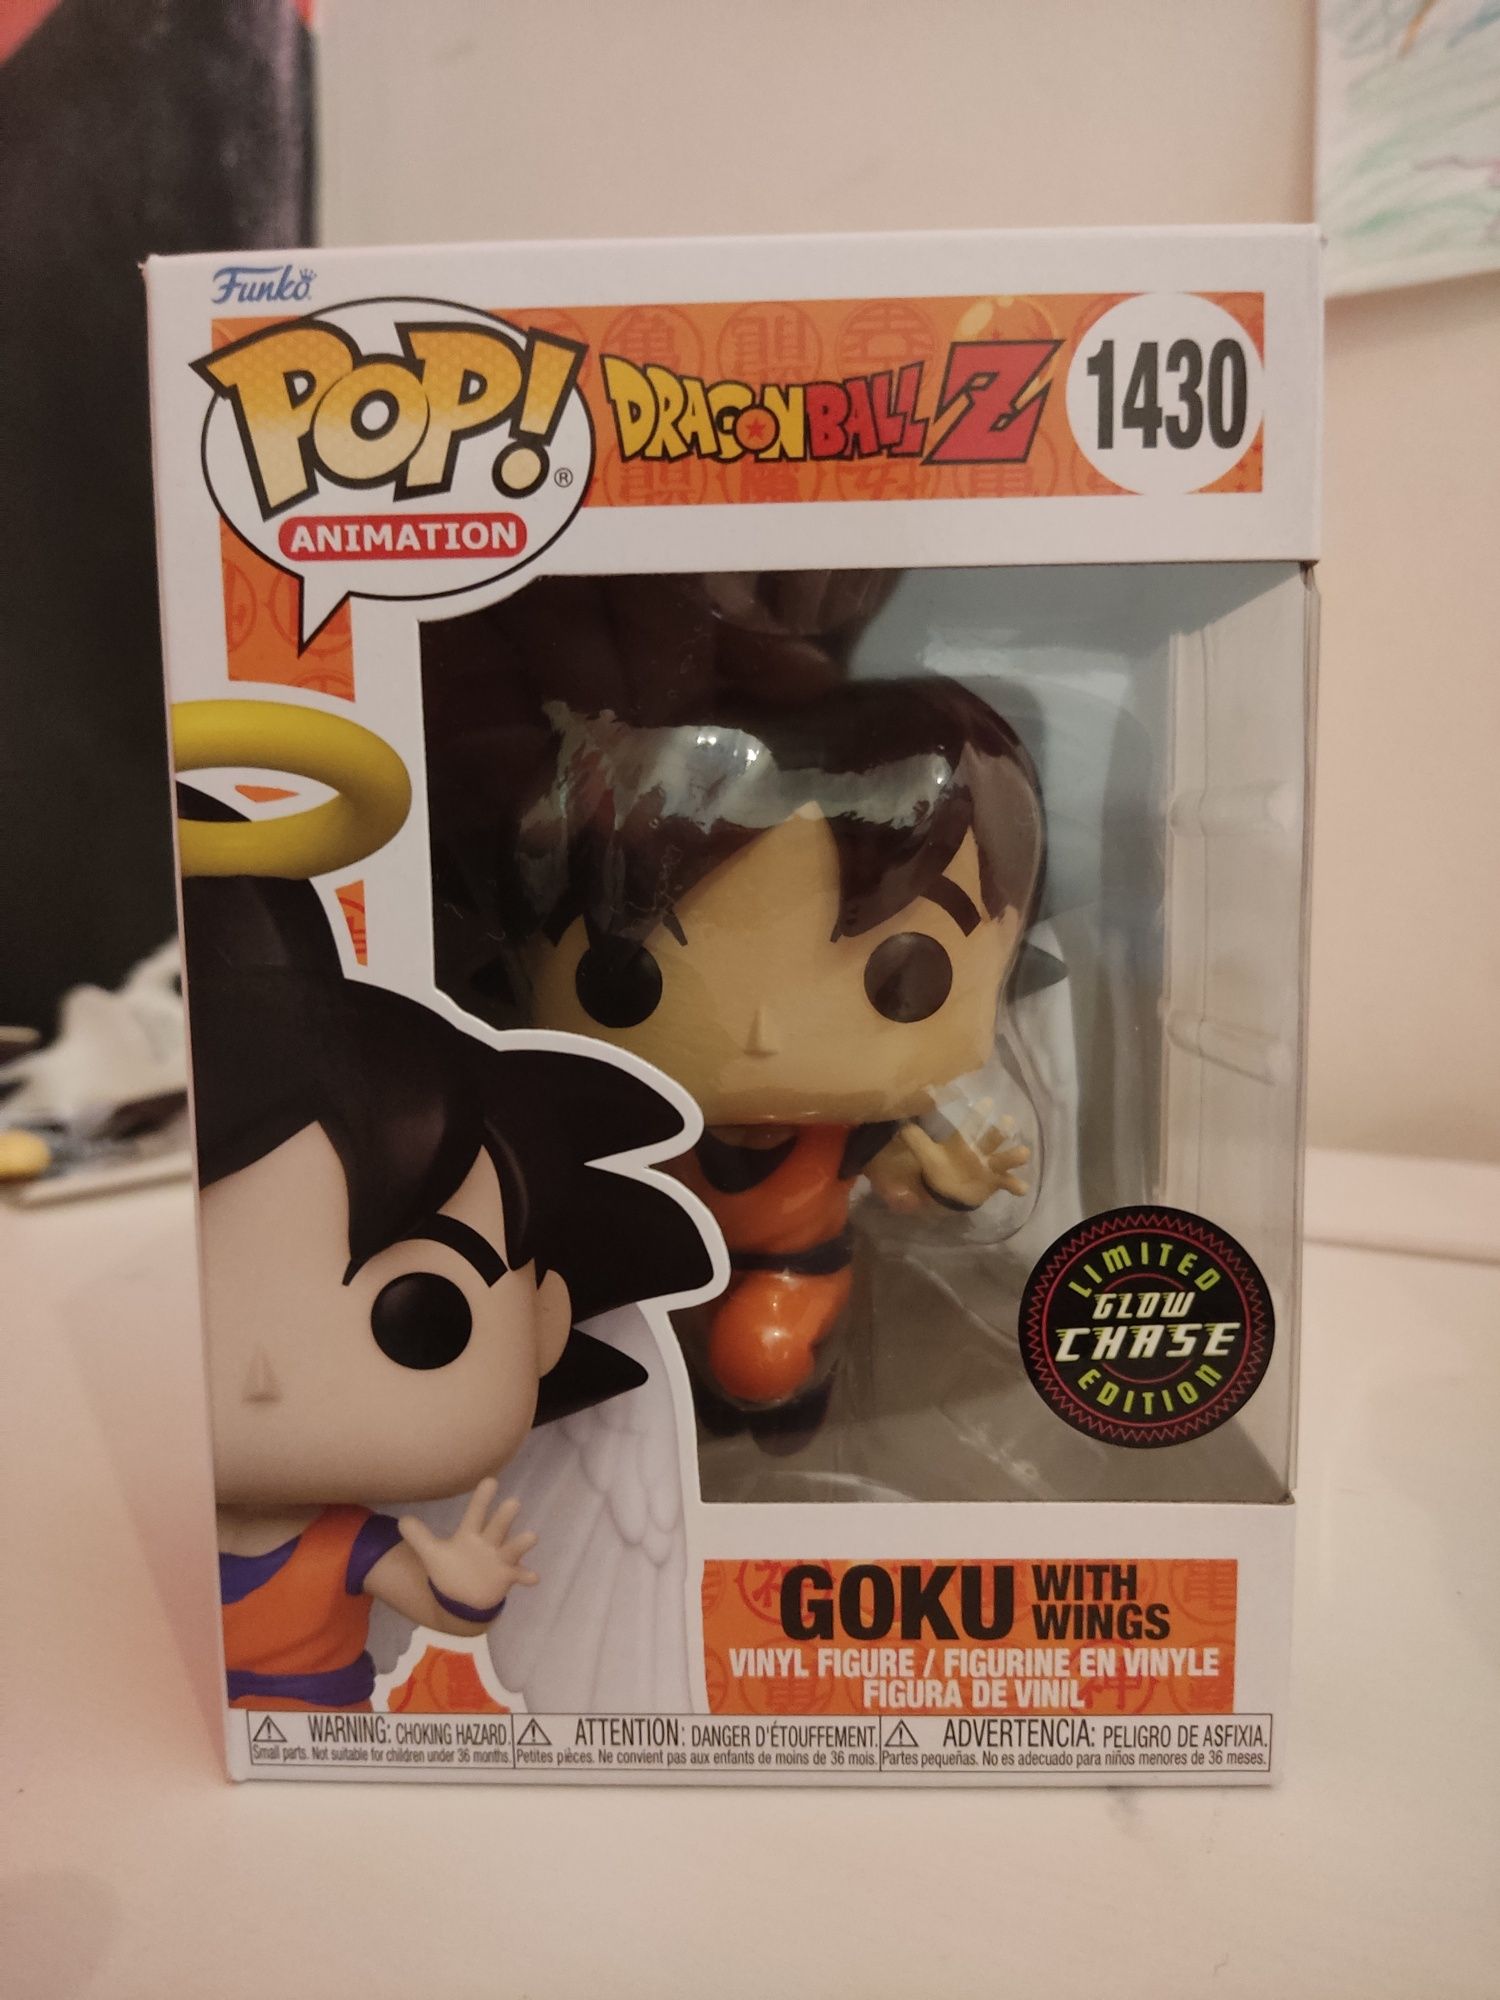 Goku With wings 1430 Funko Pop

Versão Chase!

Novo, nunca aberto.

D